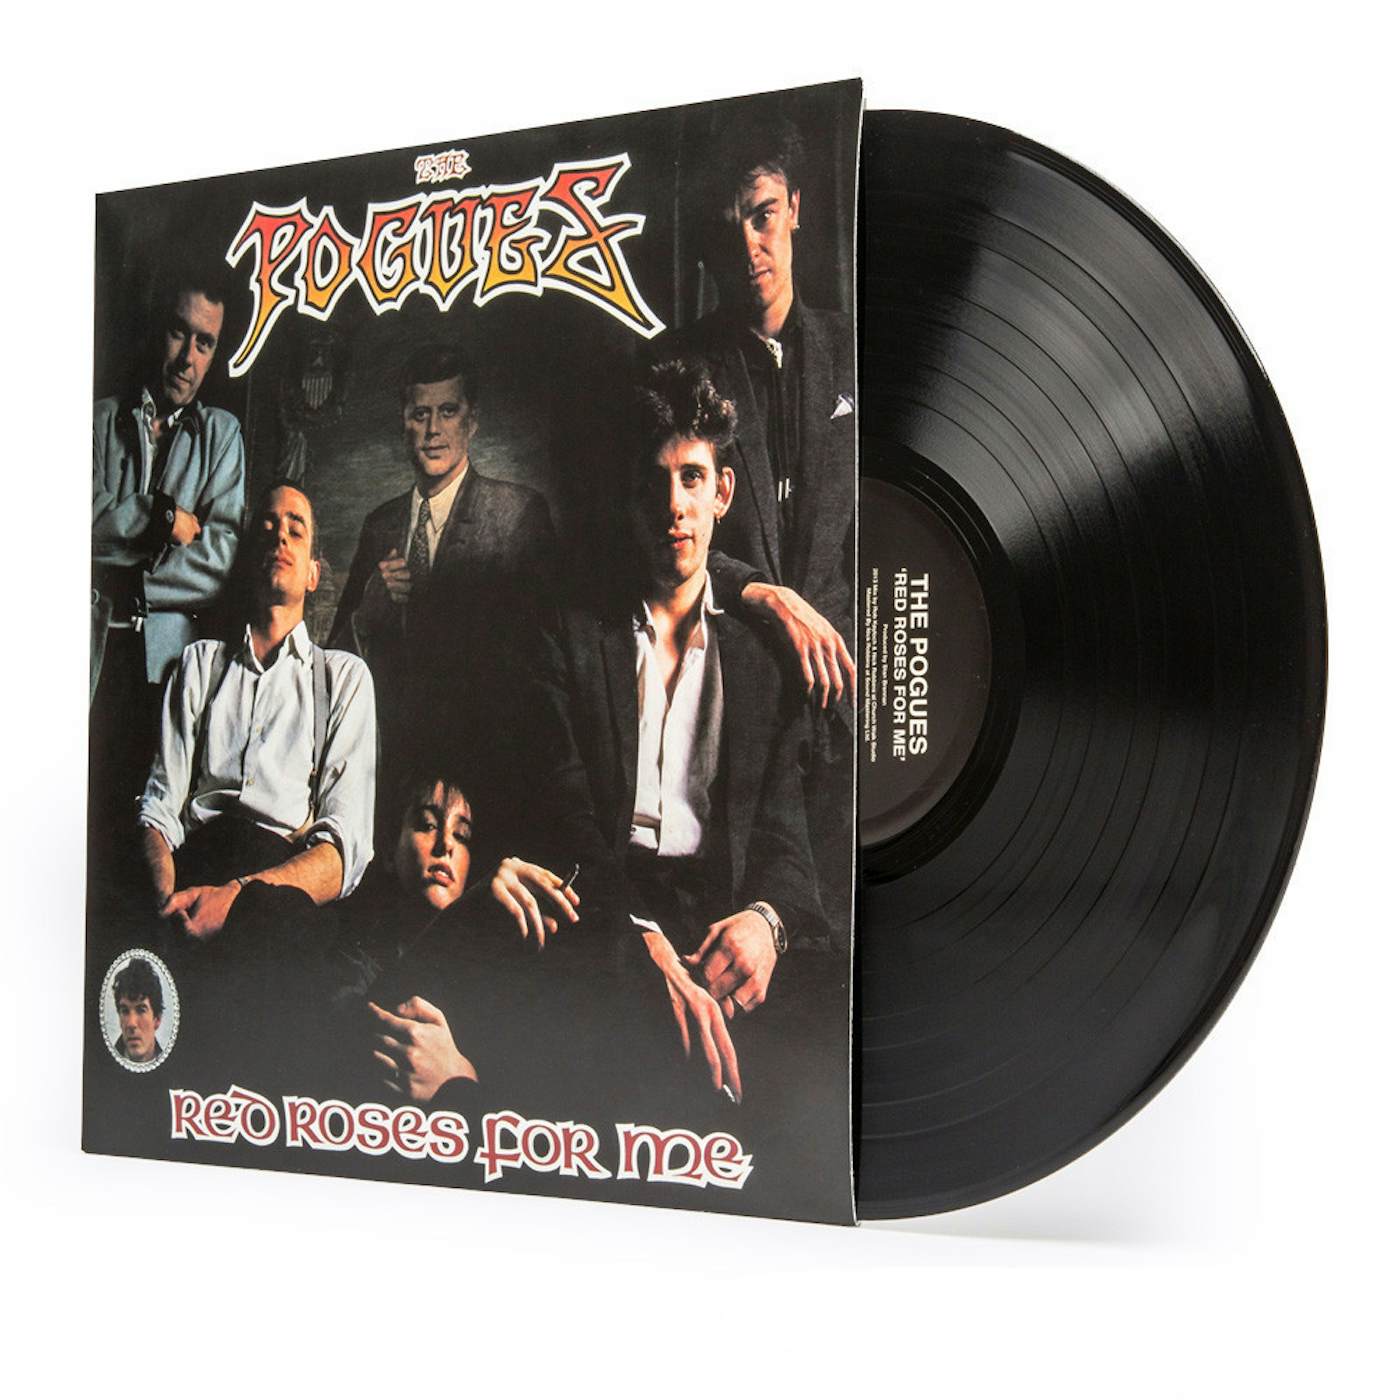  Best Of The Pogues: CDs & Vinyl